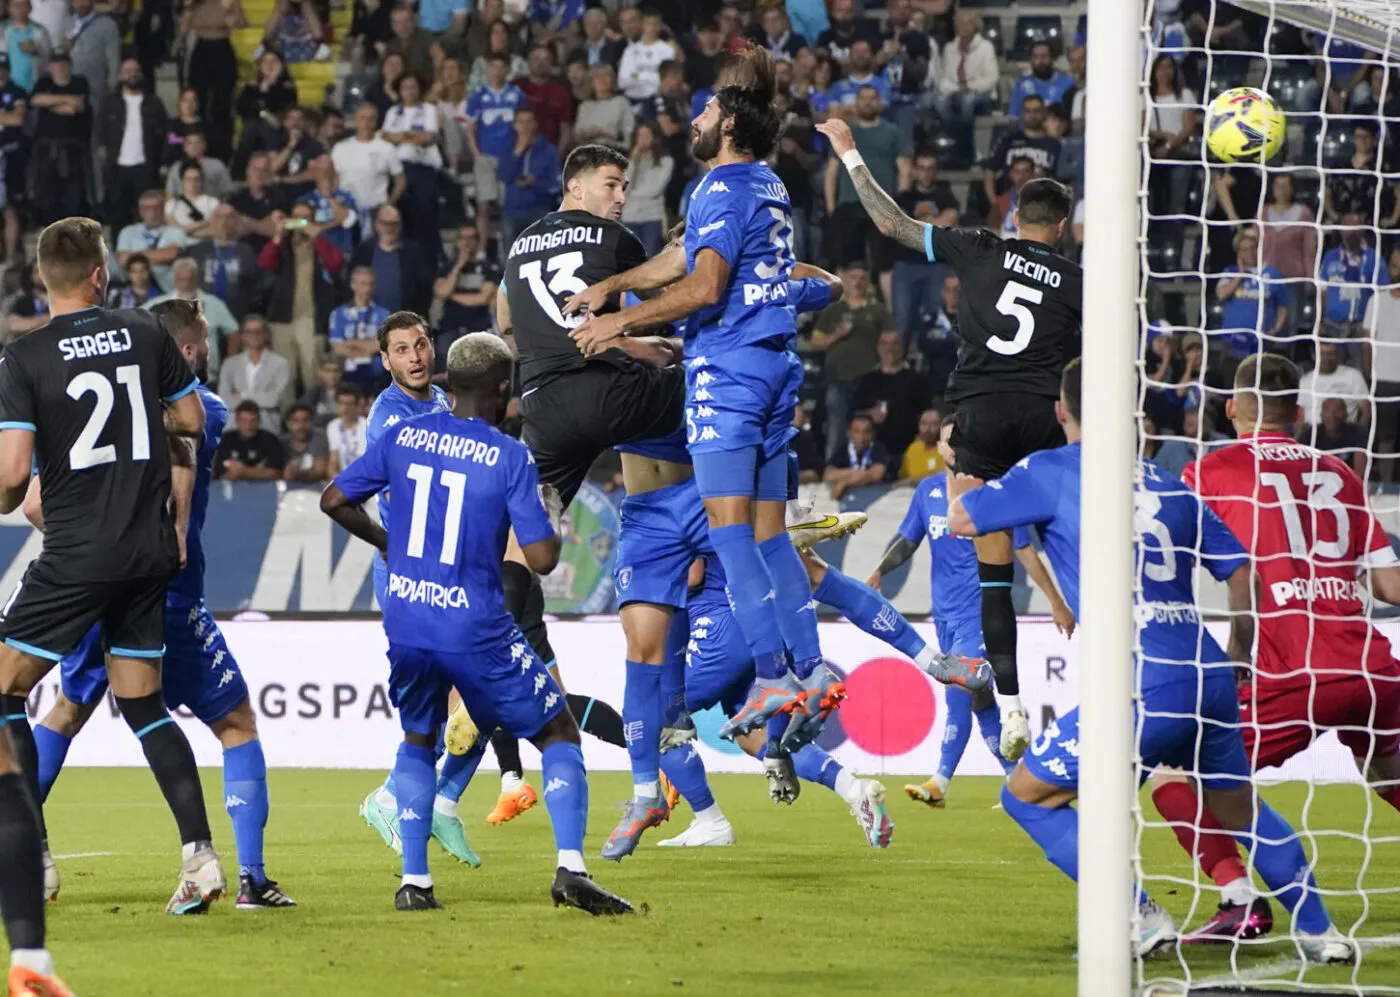 La Lazio bat Empoli et termine deuxième